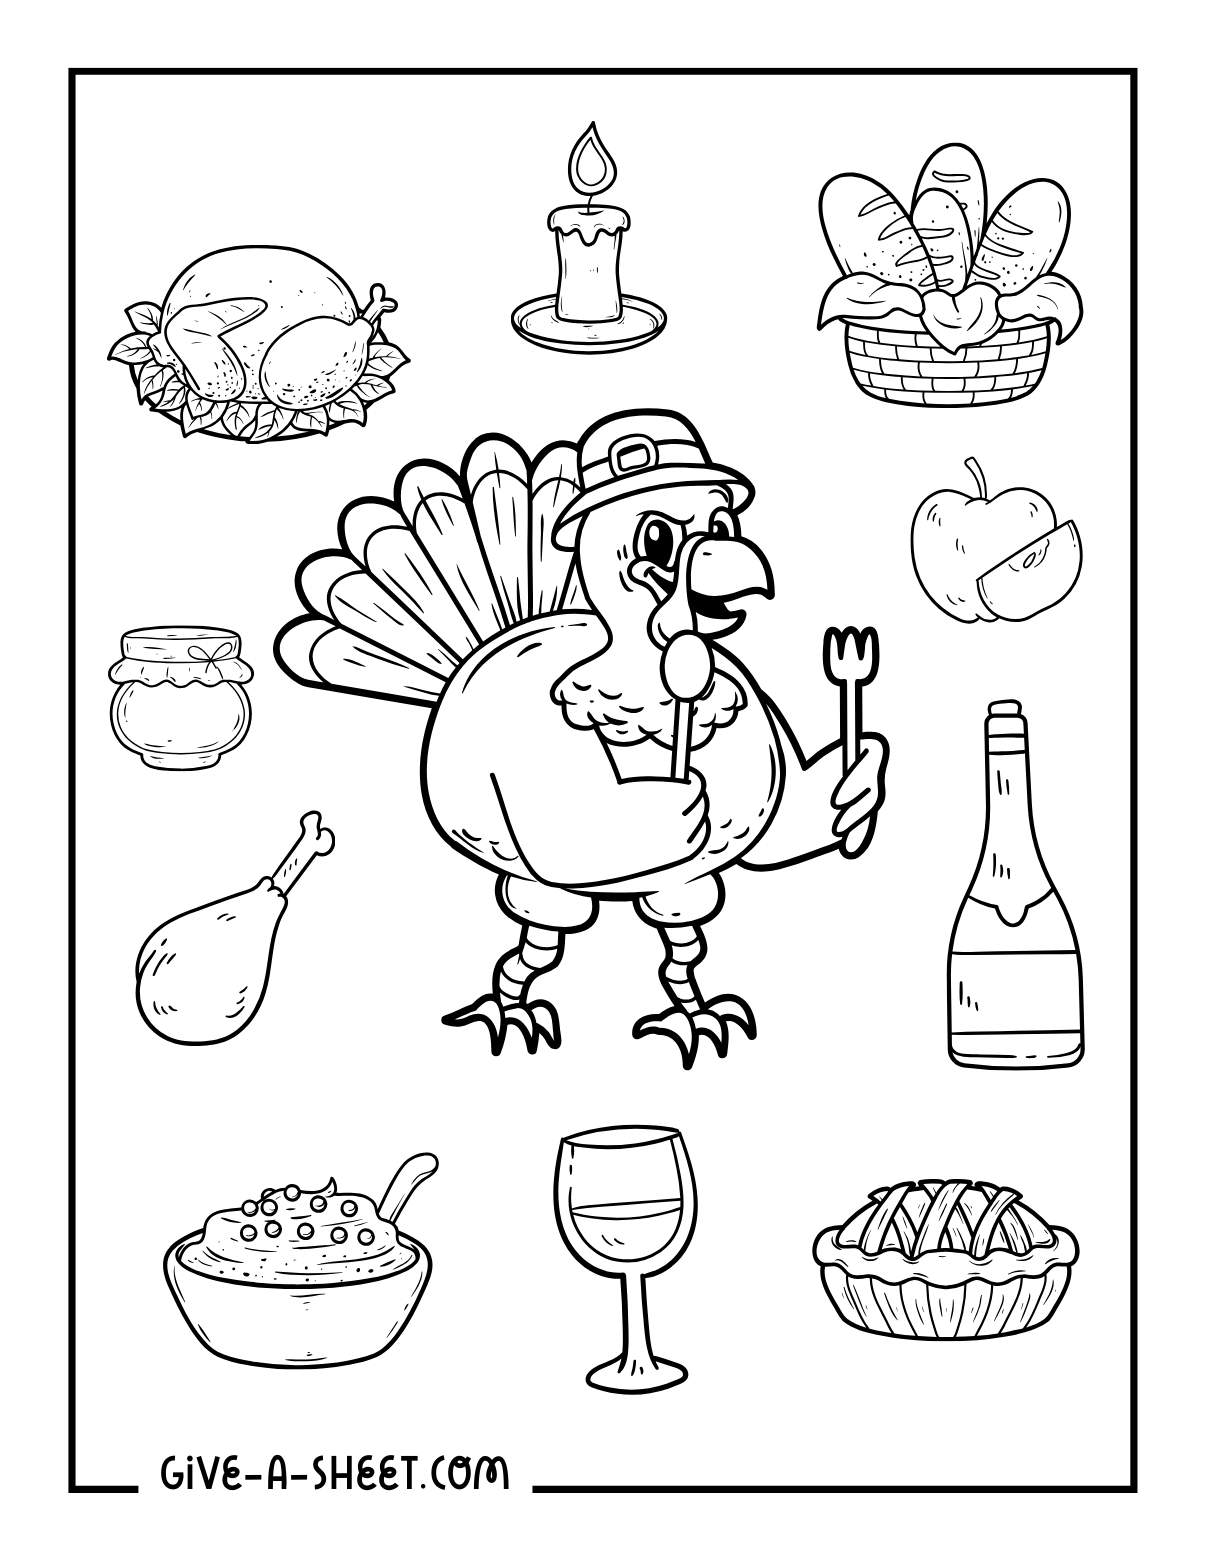 Turkey pilgrim hat thanksgiving meal coloring page.